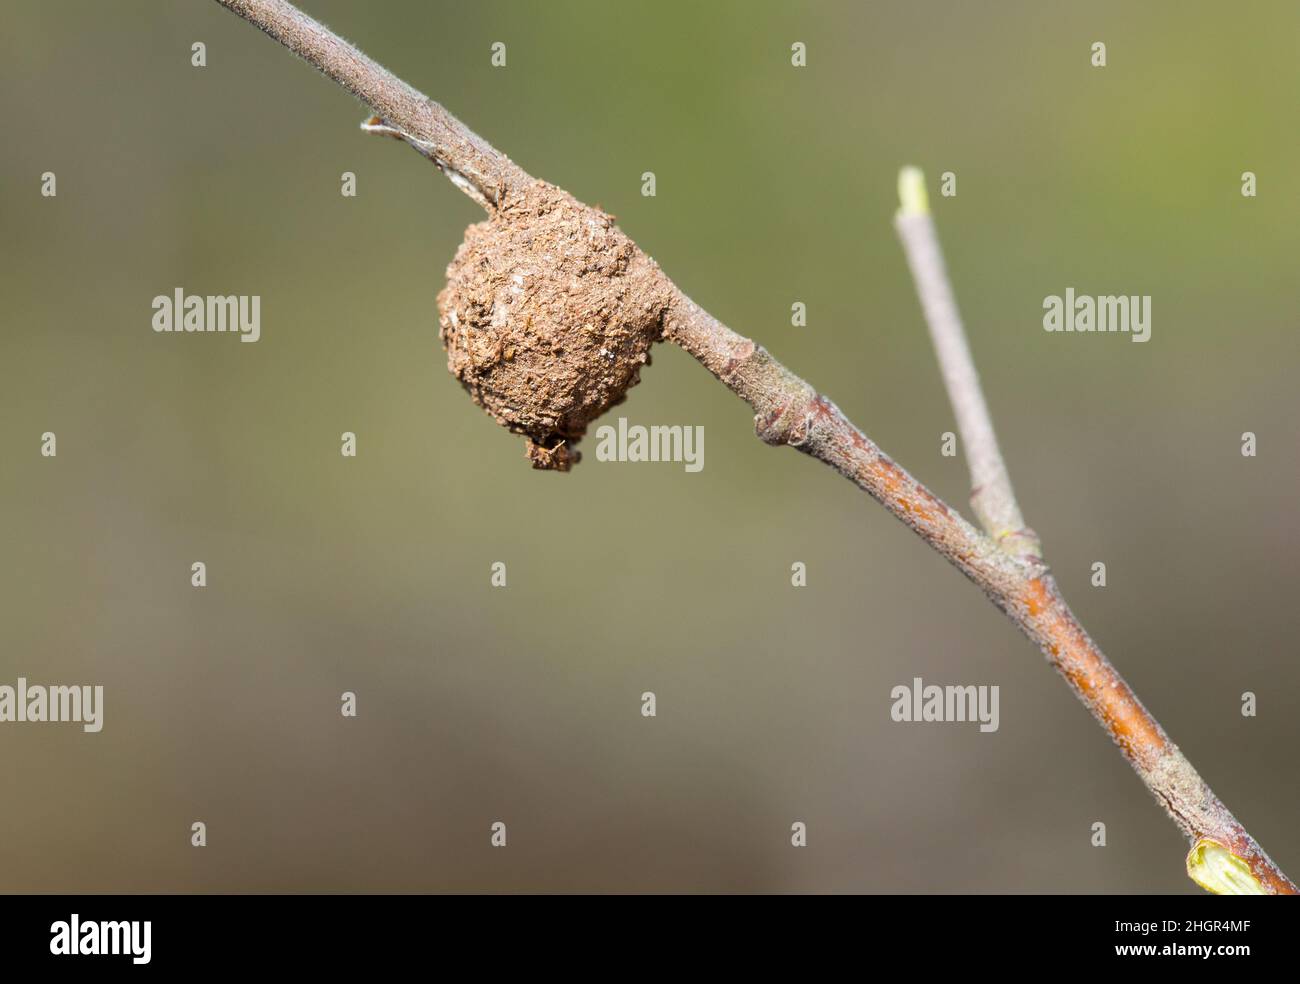 Egg cocoon of the fairy lamp spider (Agroeca brunnea) Stock Photo